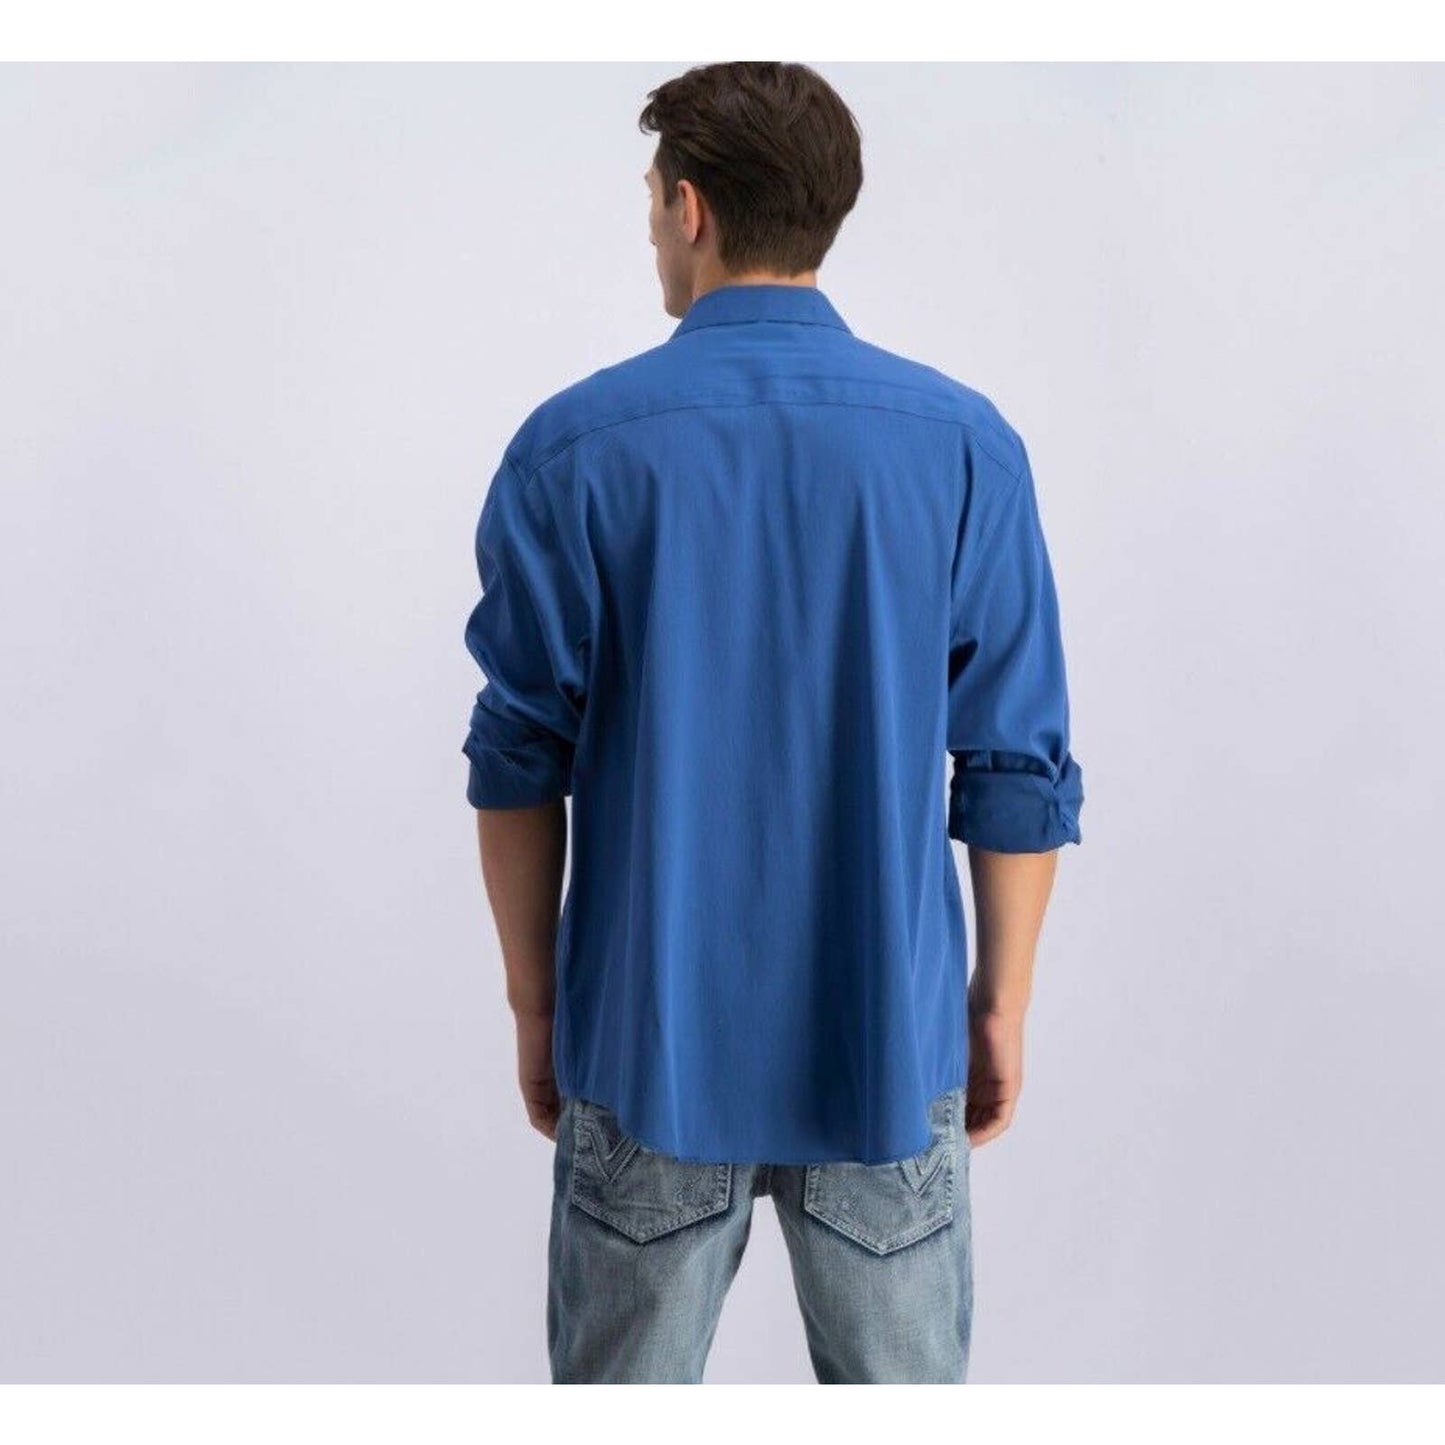 ALFANI, Men's Dark Blue Pinstriped Fashion Button Up Shirt, Size XL Slim Fit NWT